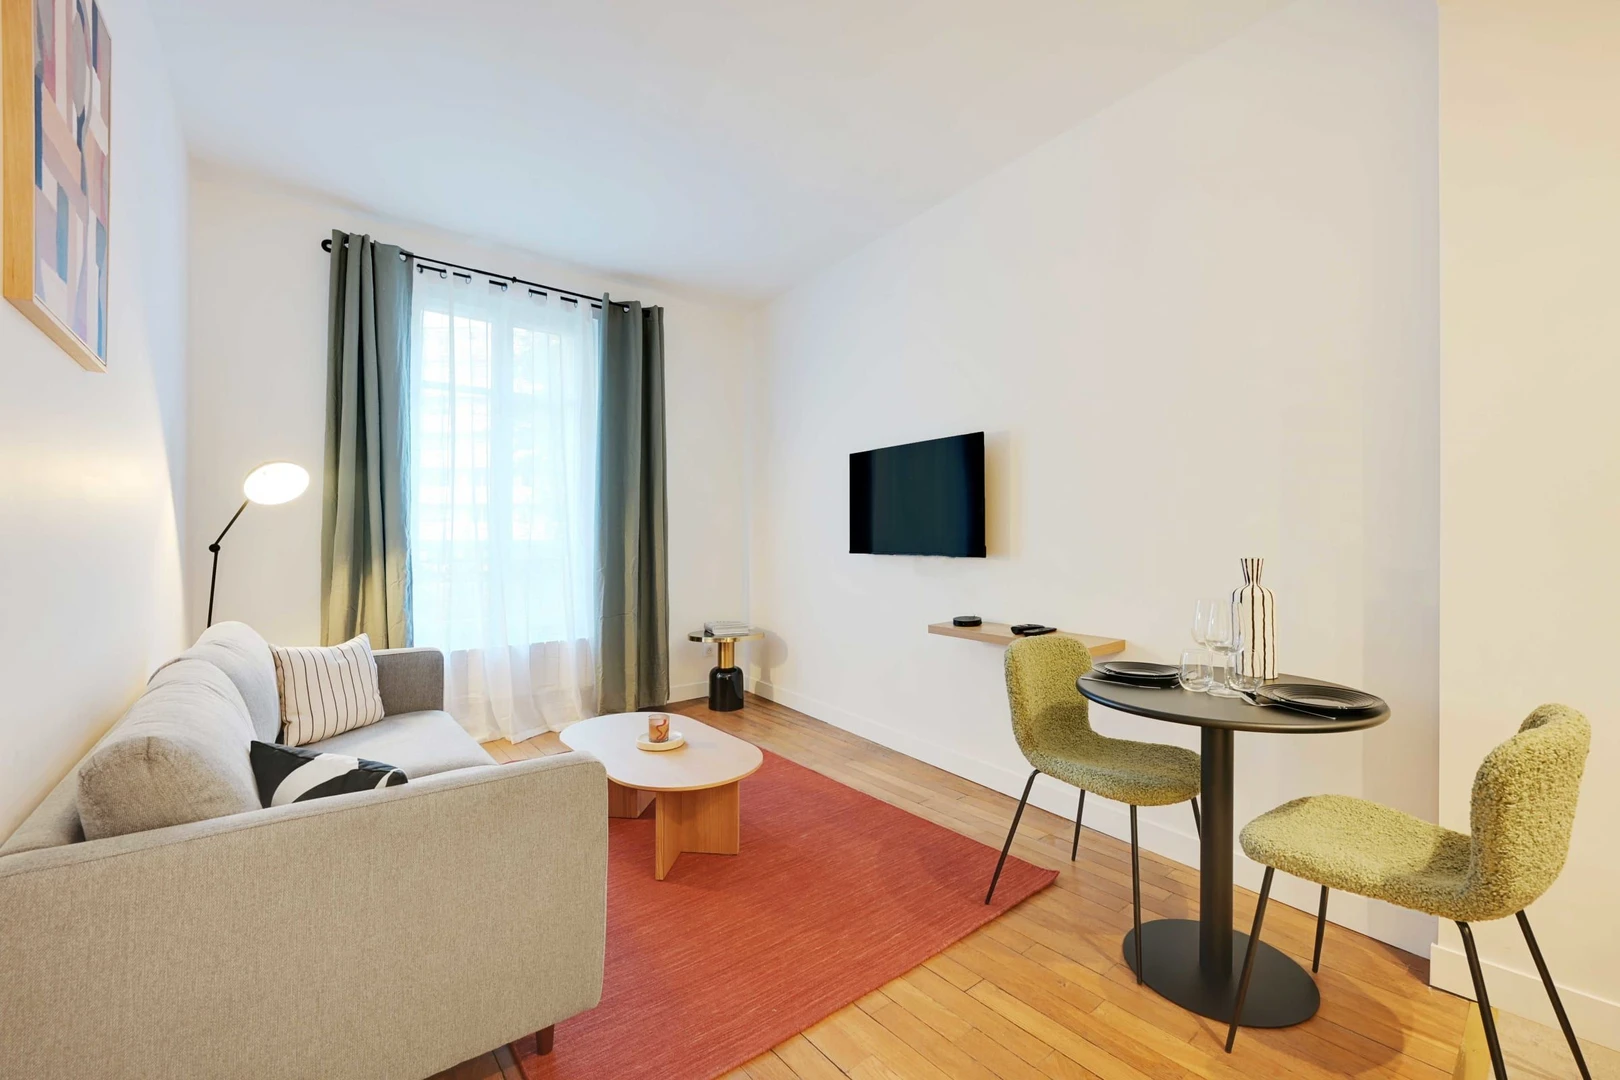 Cheap private room in boulogne-billancourt